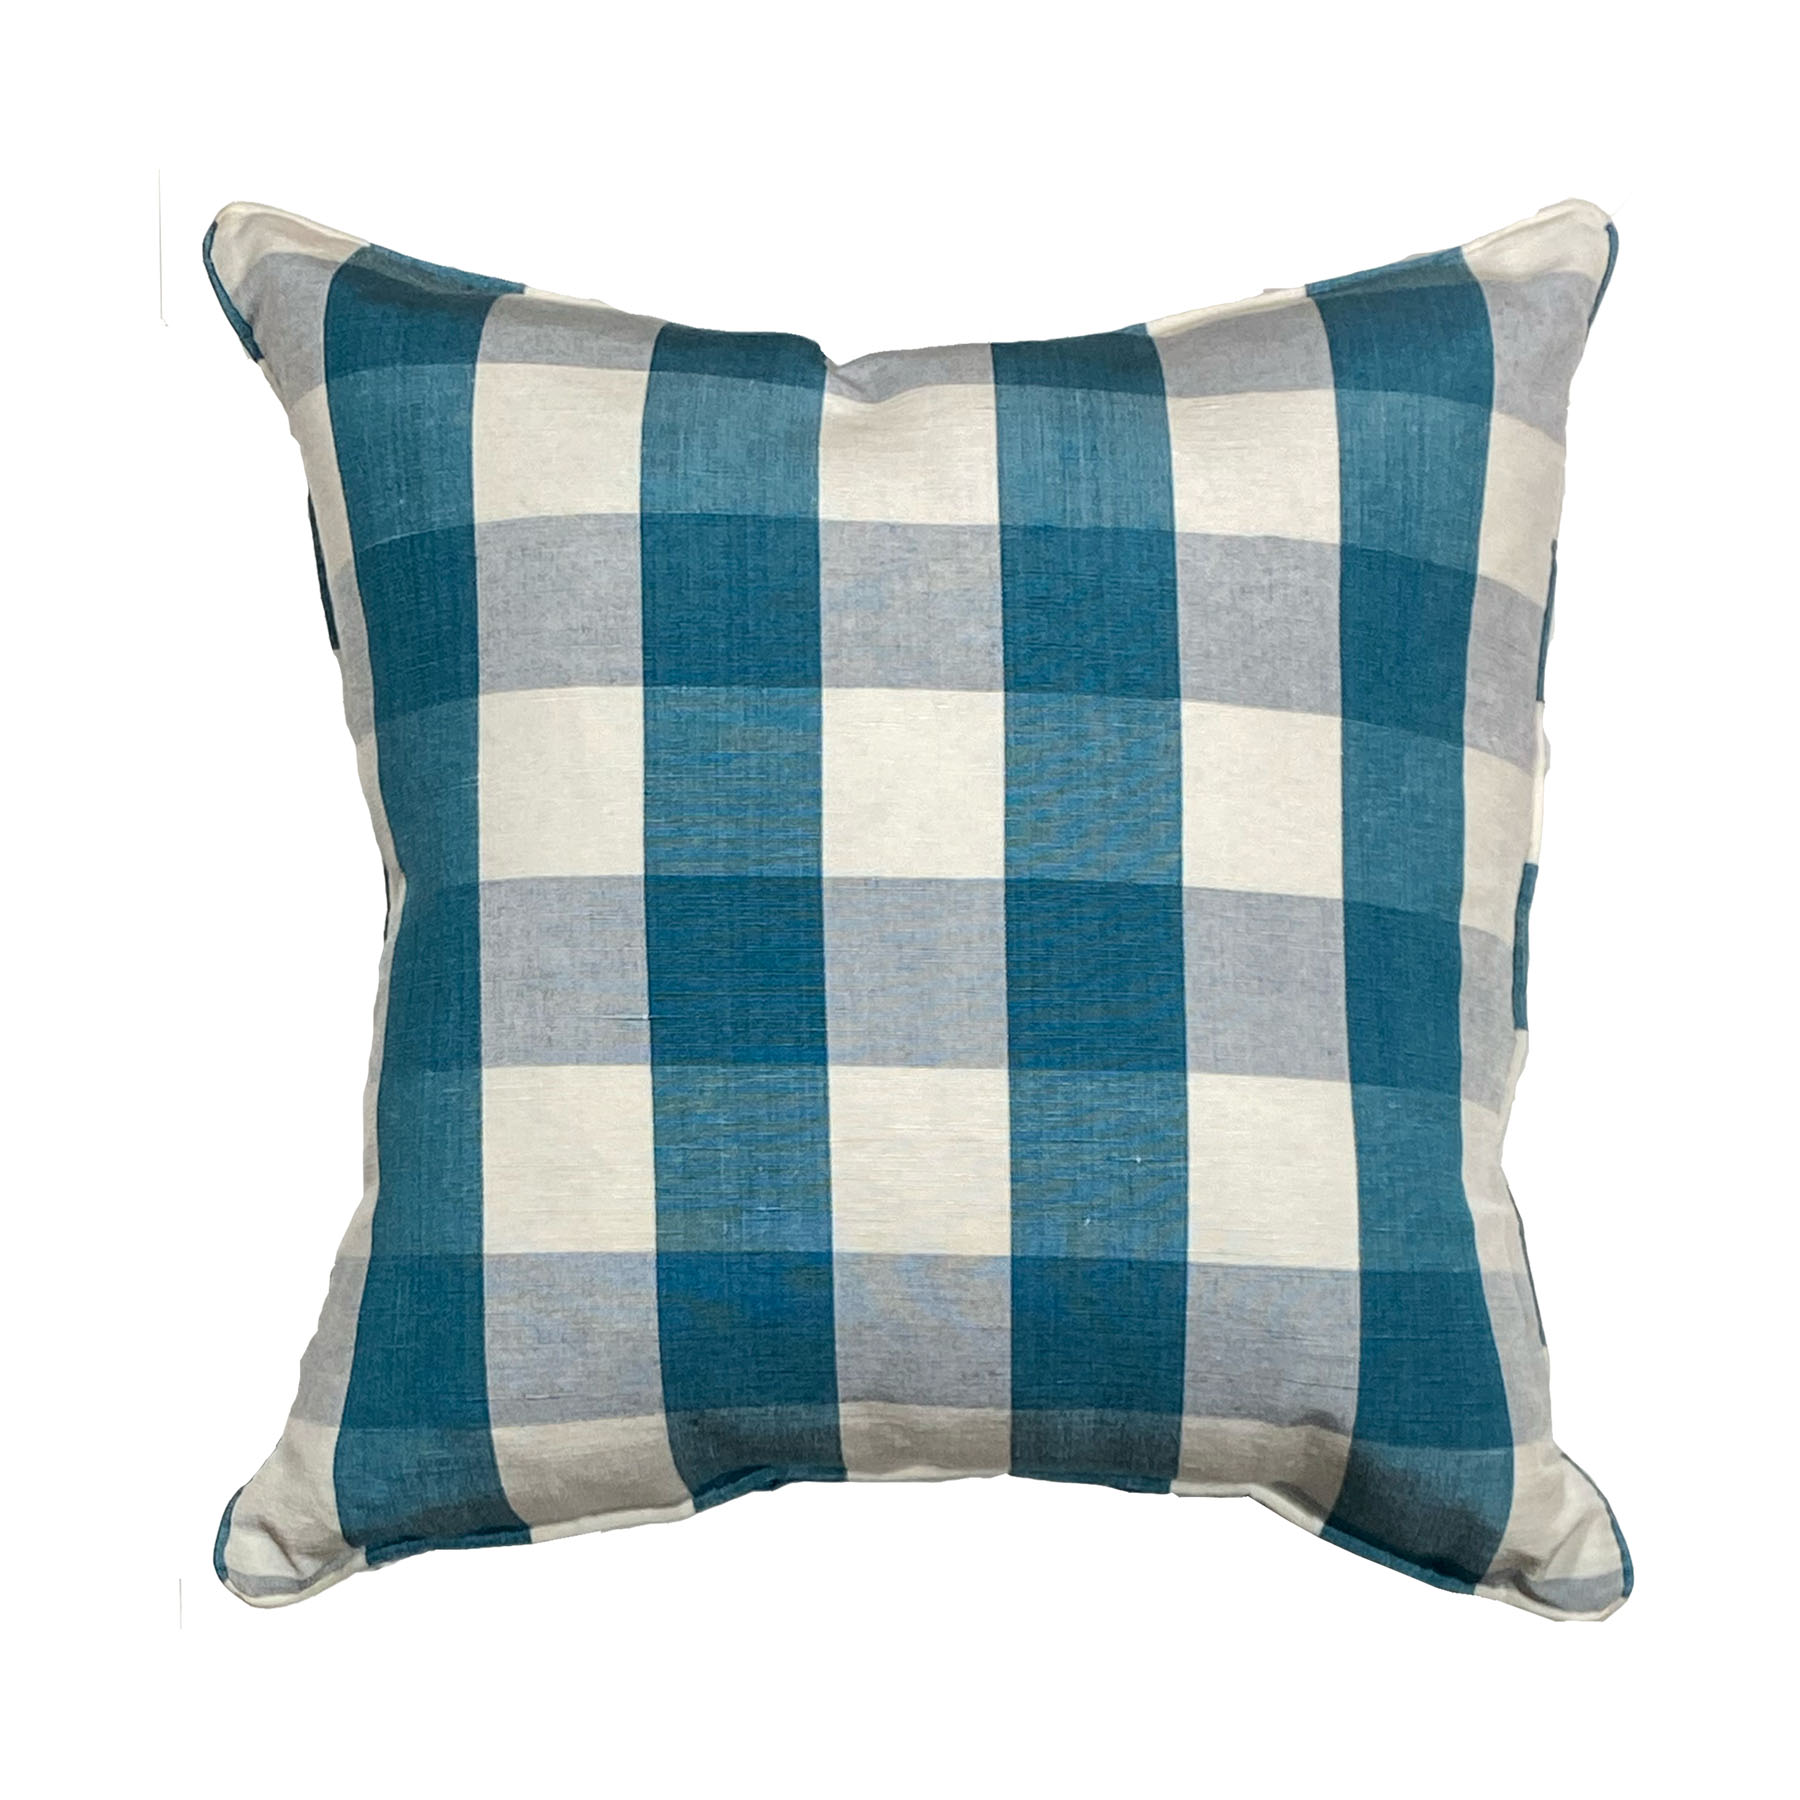 A blue and white chequered cushion.